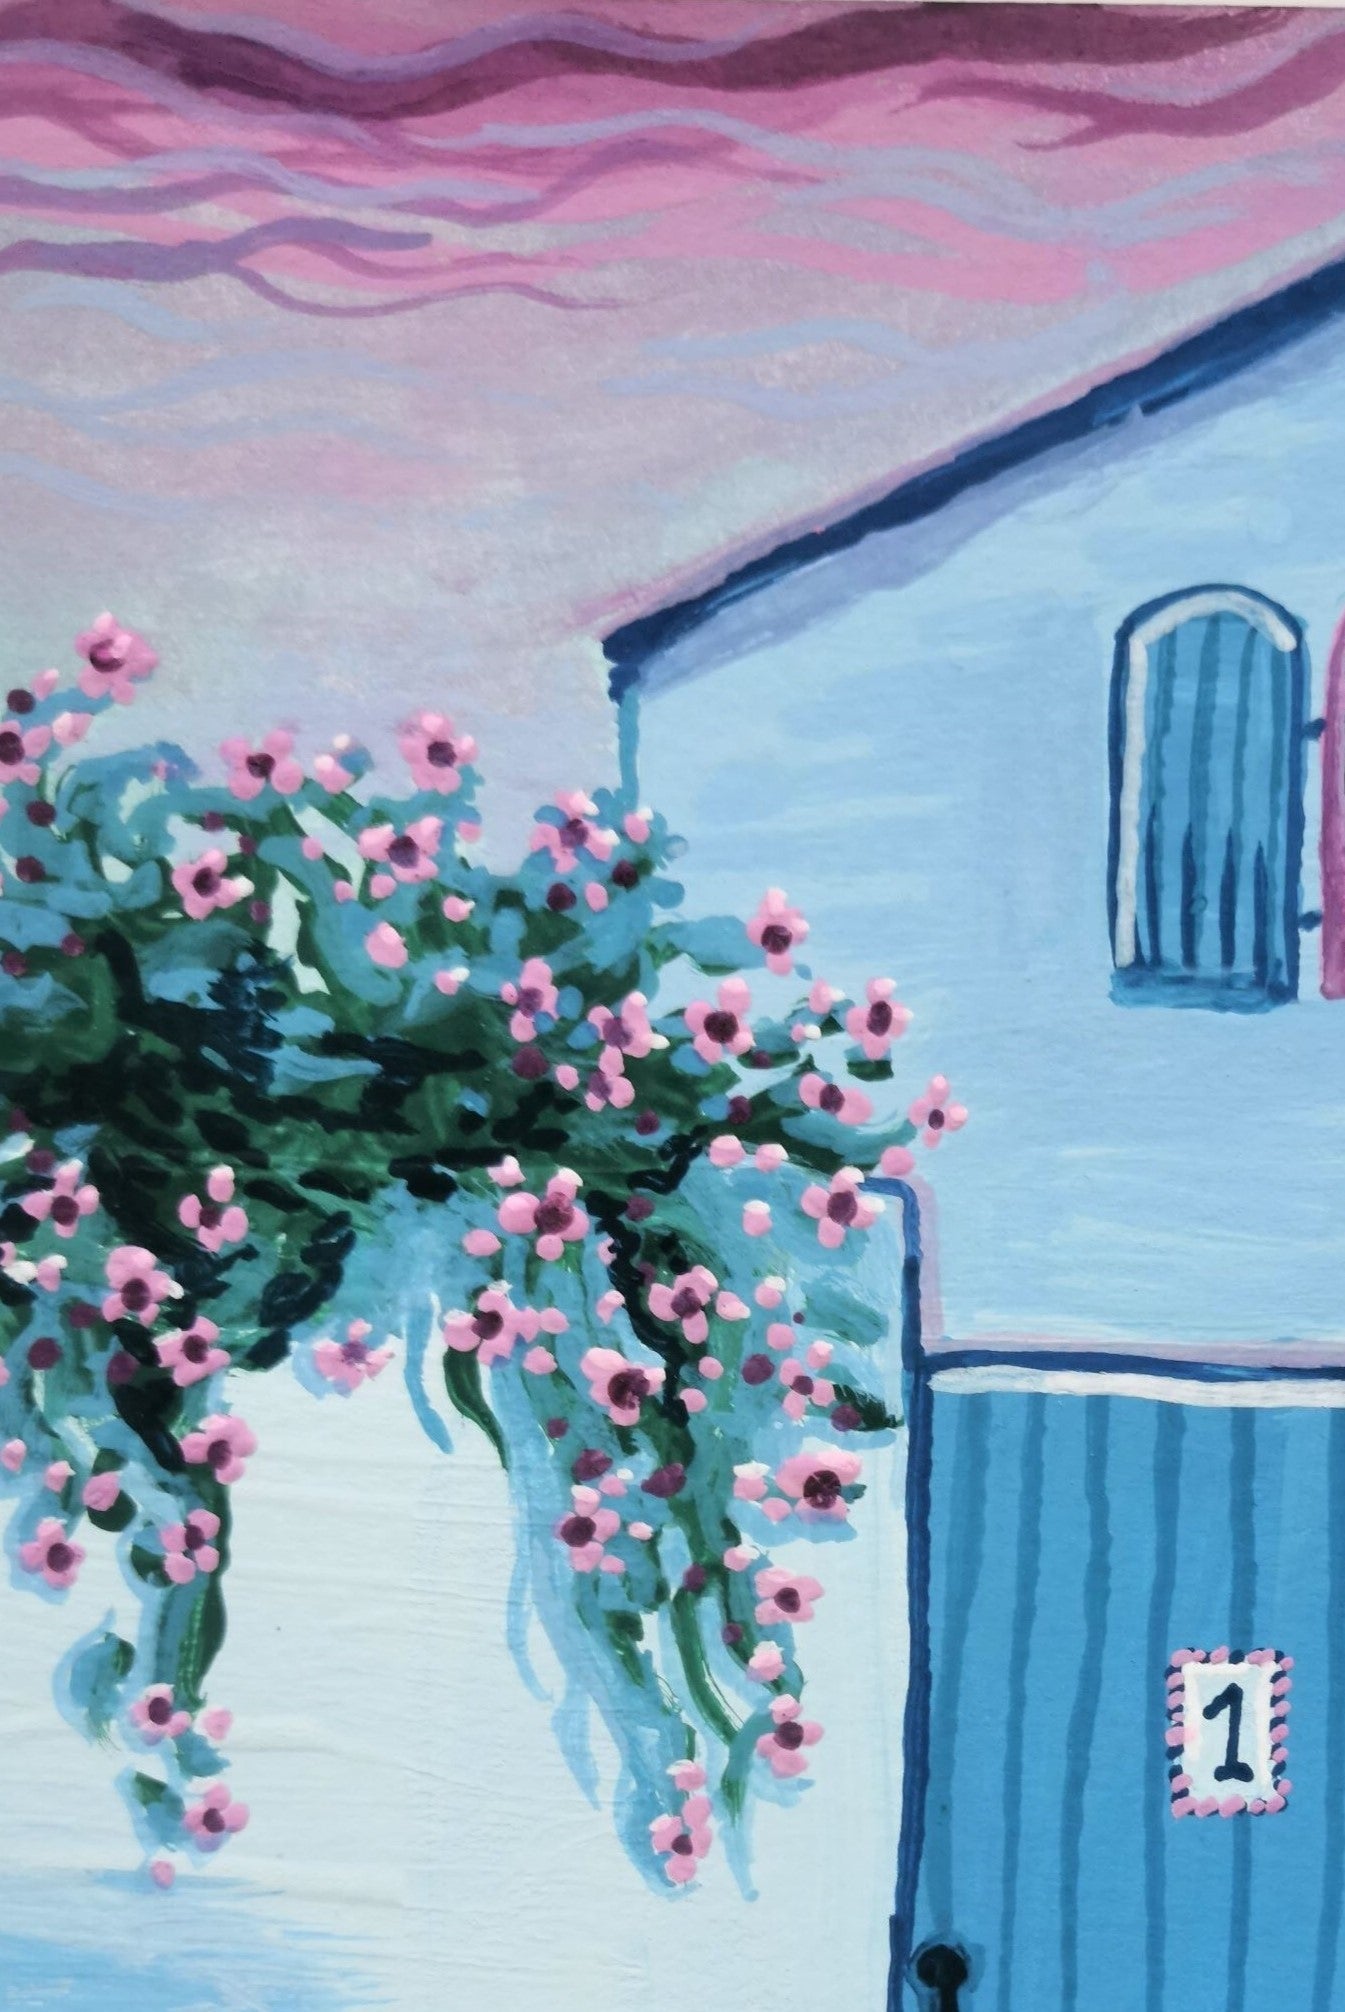 Blå gade i Frankrig - Originalt gouache-maleri på akvarelpapir inklusiv egetræsramme (A5: 14.8 x 21 cm) Nymaane